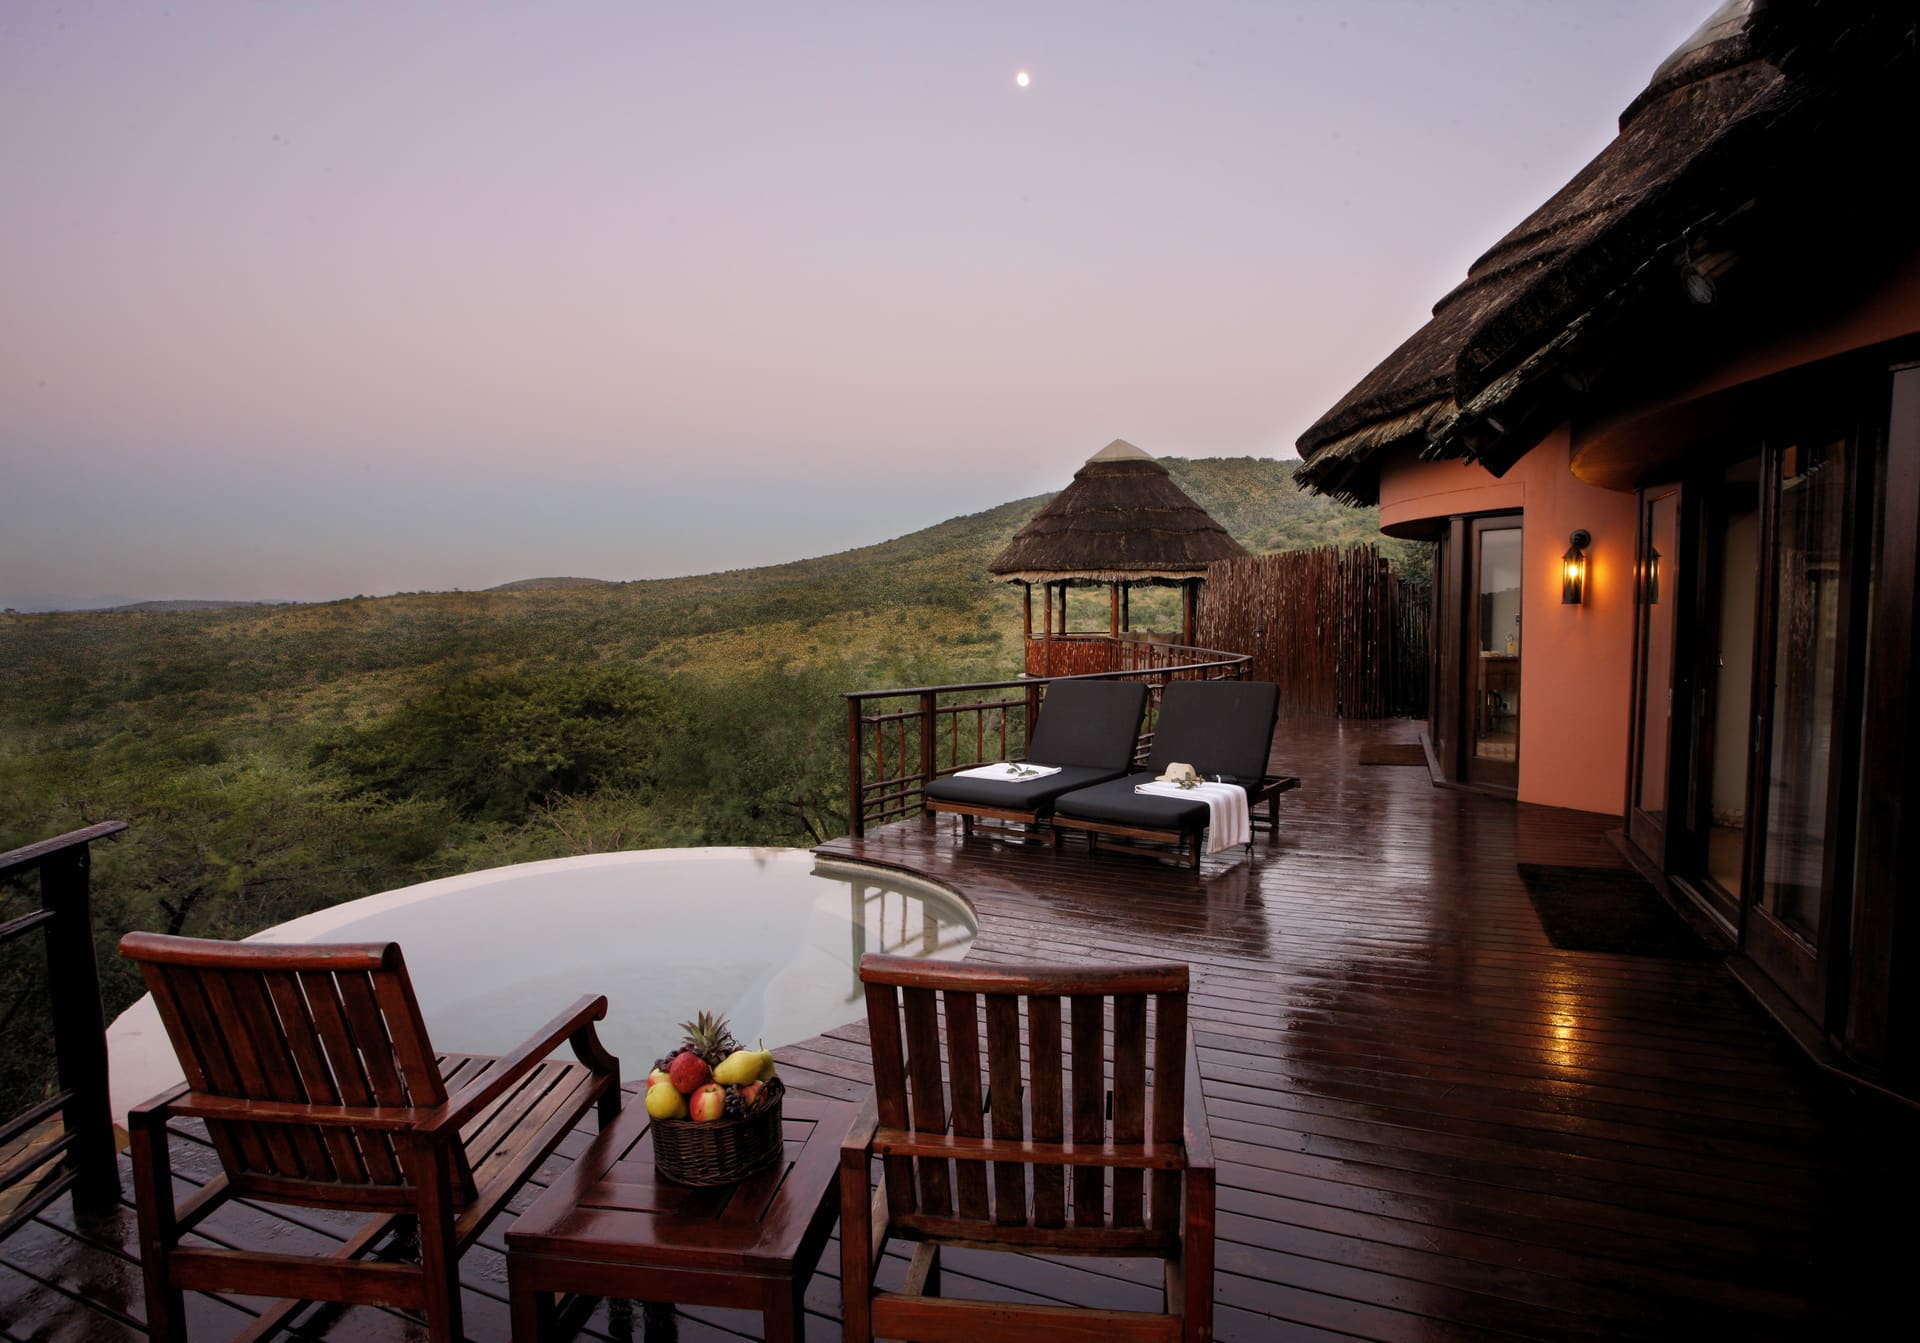 Thanda Safari Lodge Deck